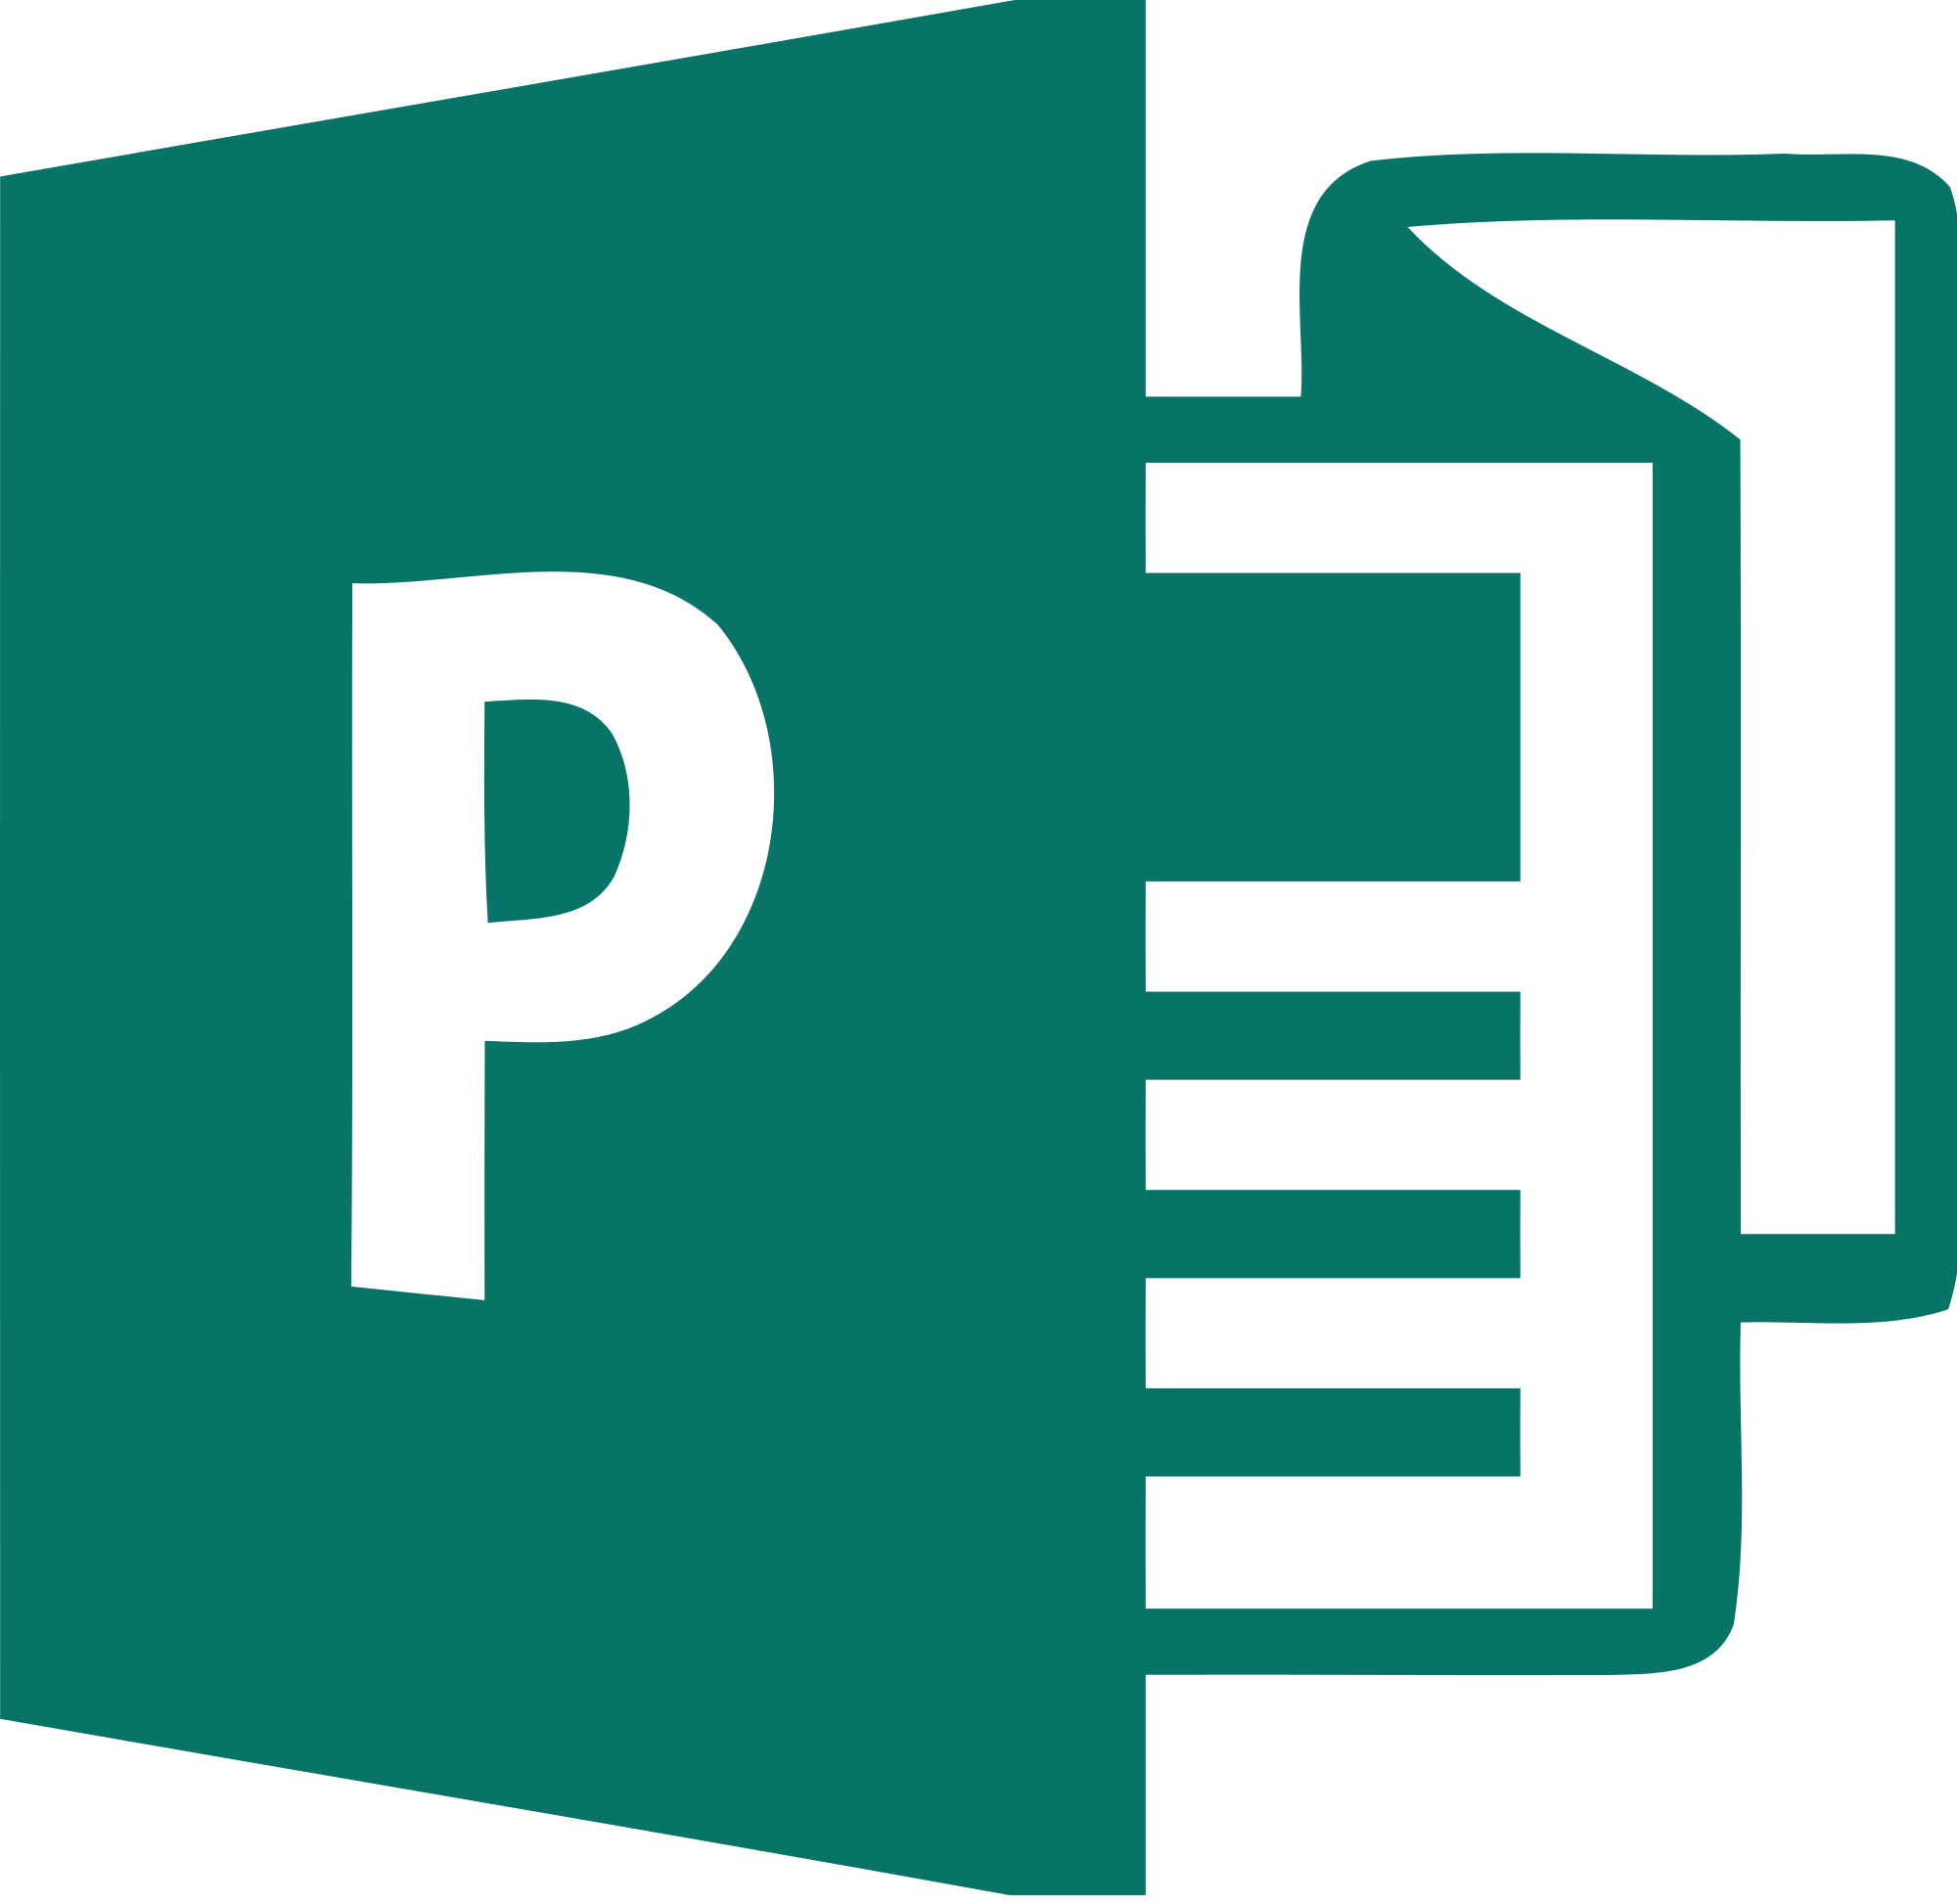 Microsoft Green Logo - File:Microsoft Publisher 2013 logo.svg - Wikimedia Commons